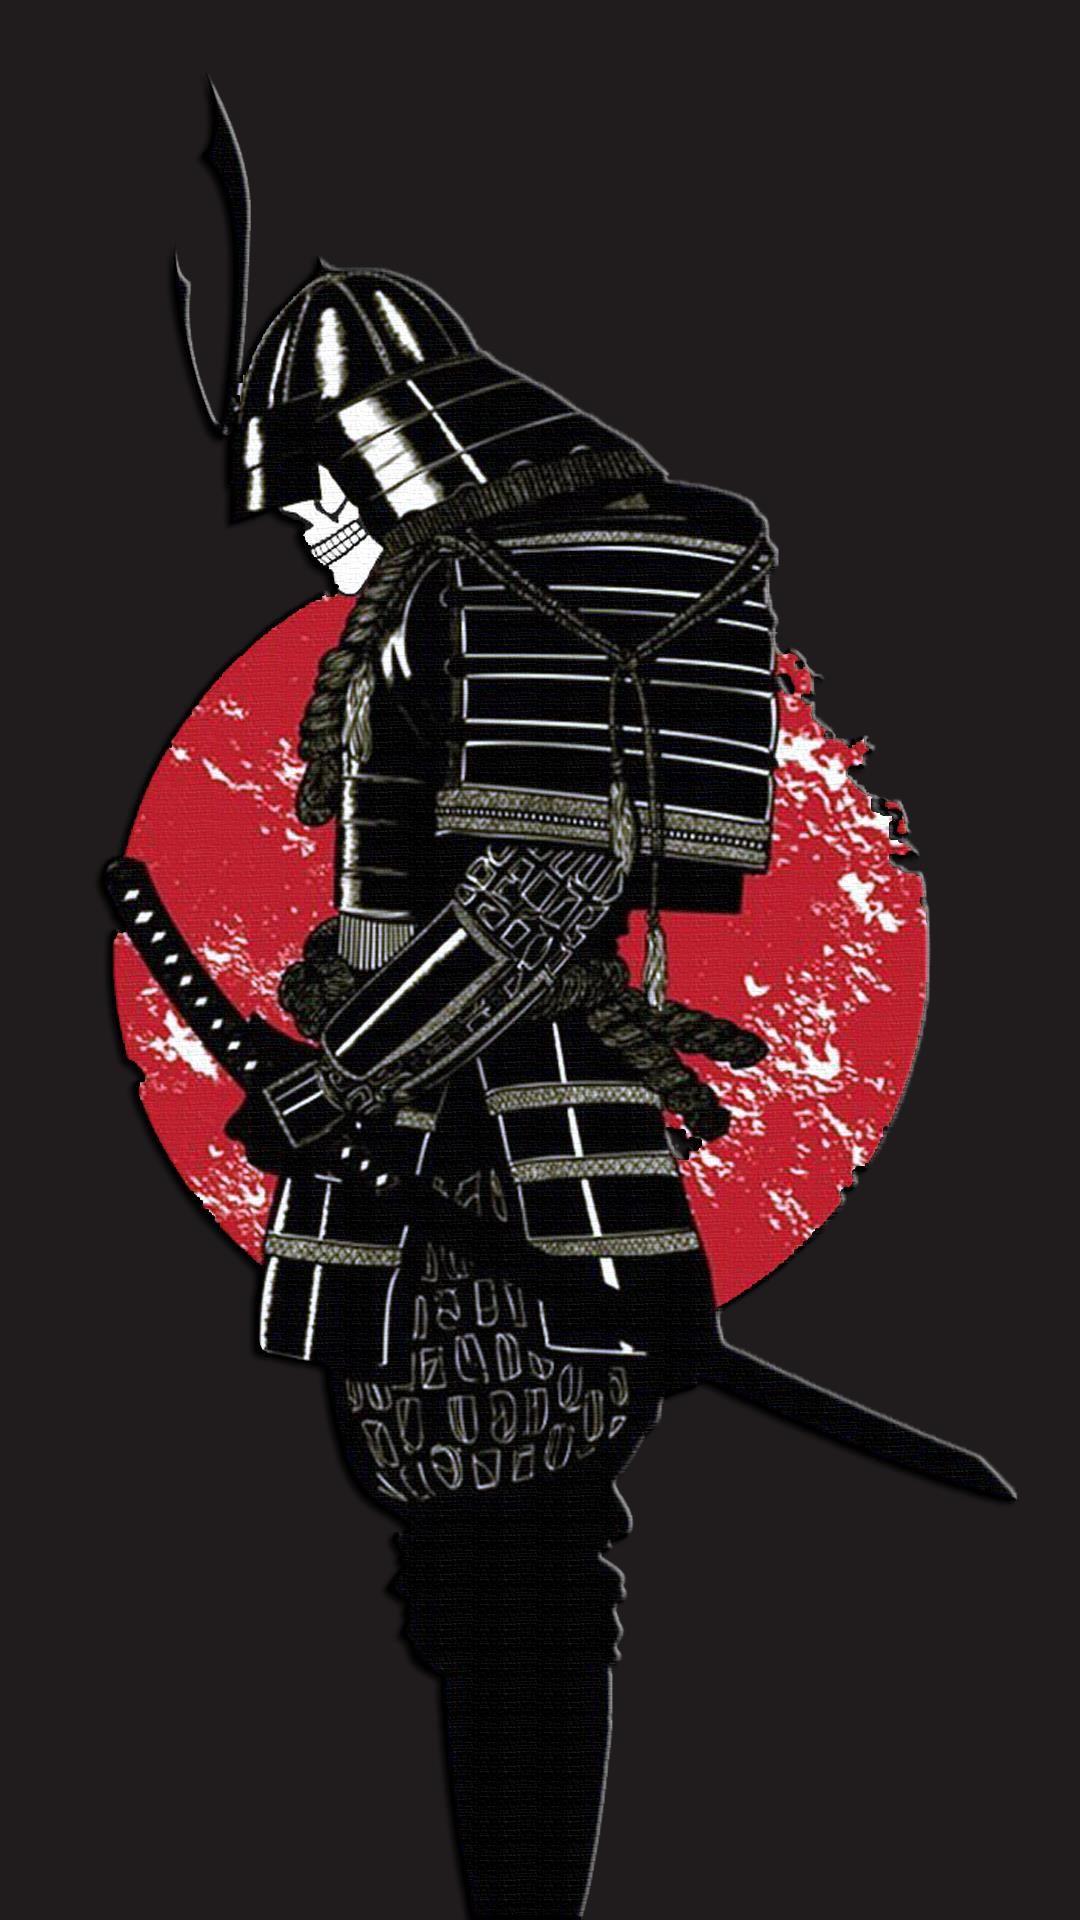 Samurai iPhone Wallpaper Free Samurai iPhone Background